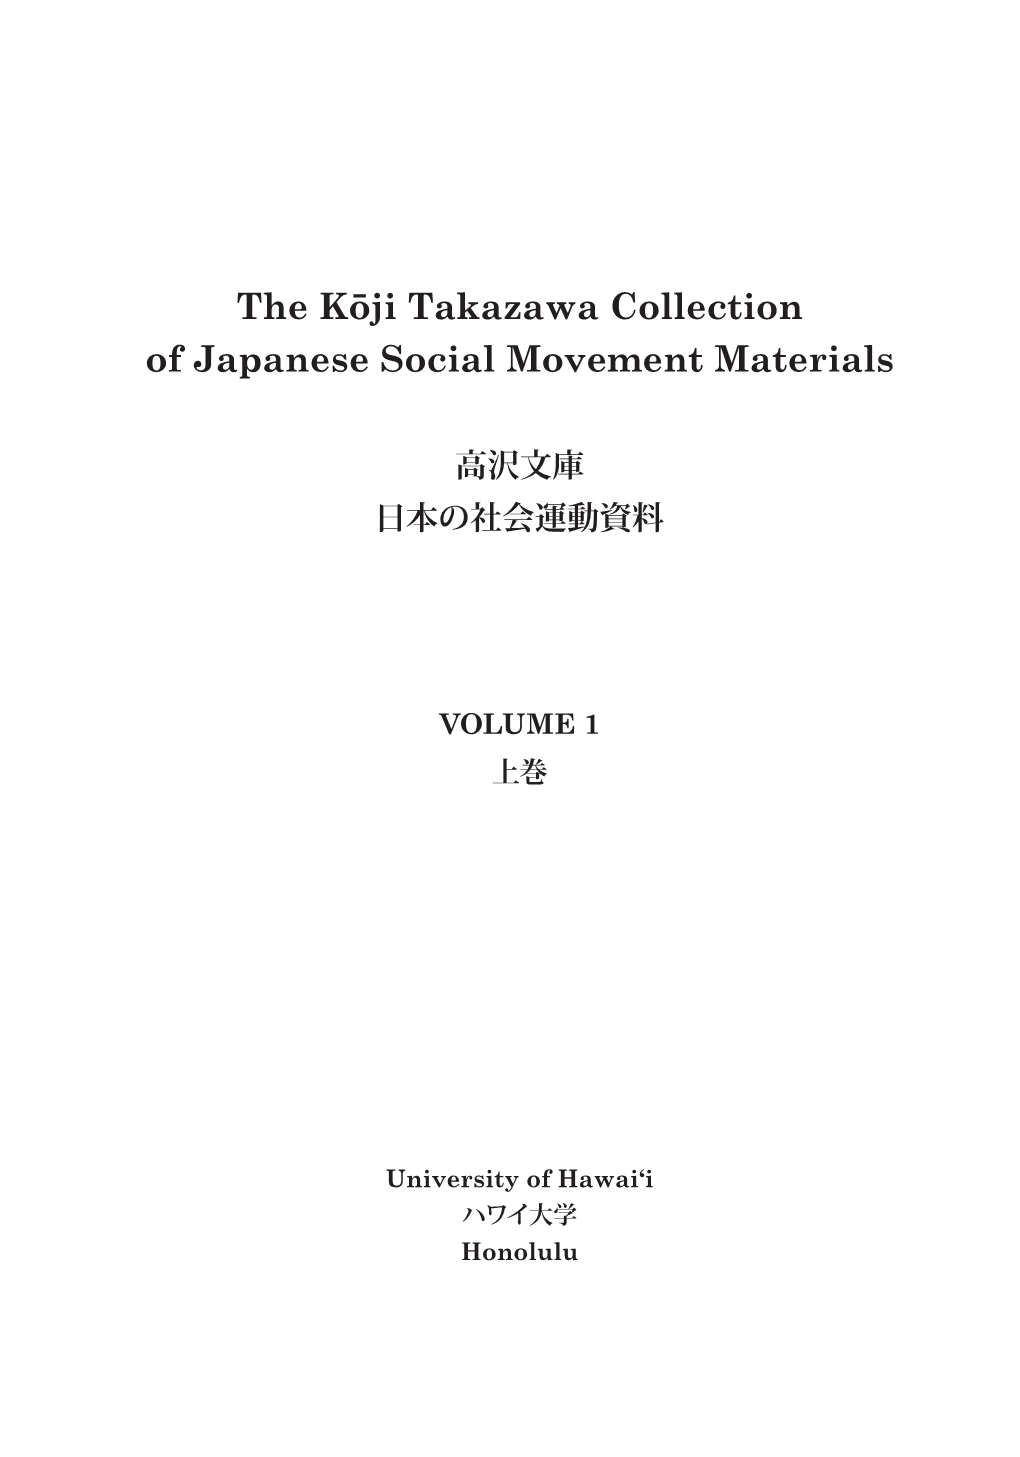 The Kōji Takazawa Collection of Japanese Social Movement Materials